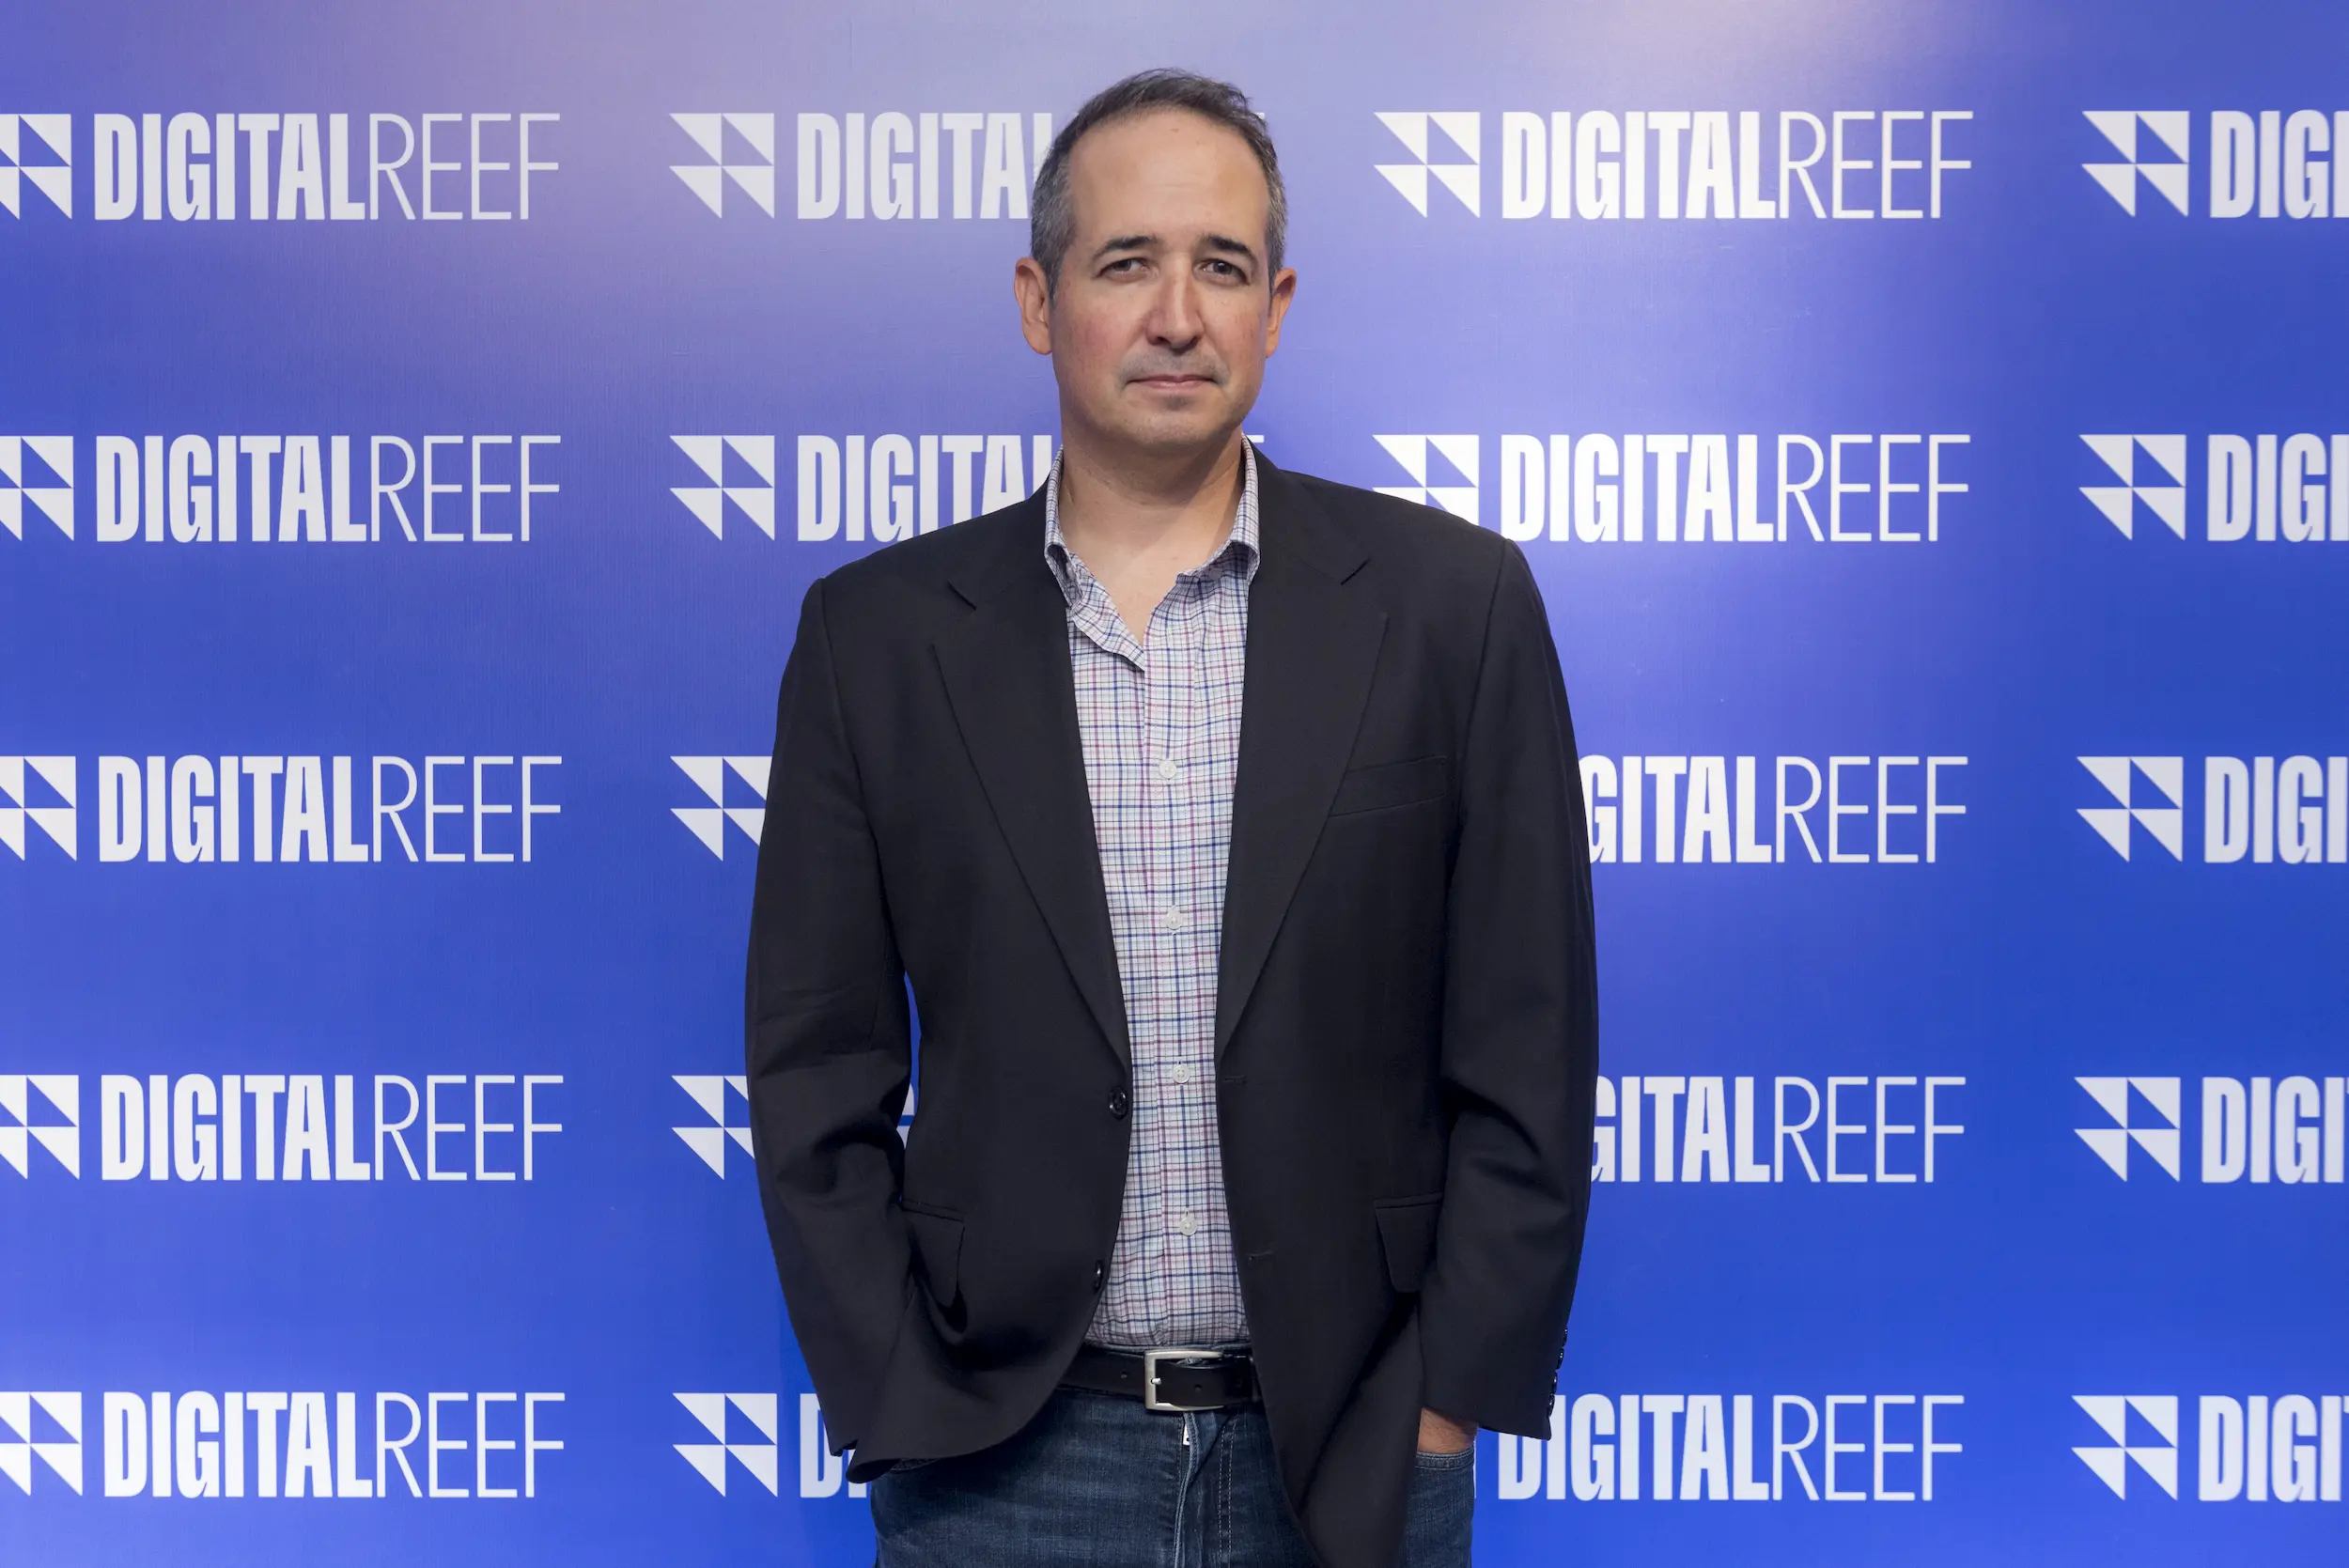 MARK YACKANICH Presidete y CEO,Digital Reef